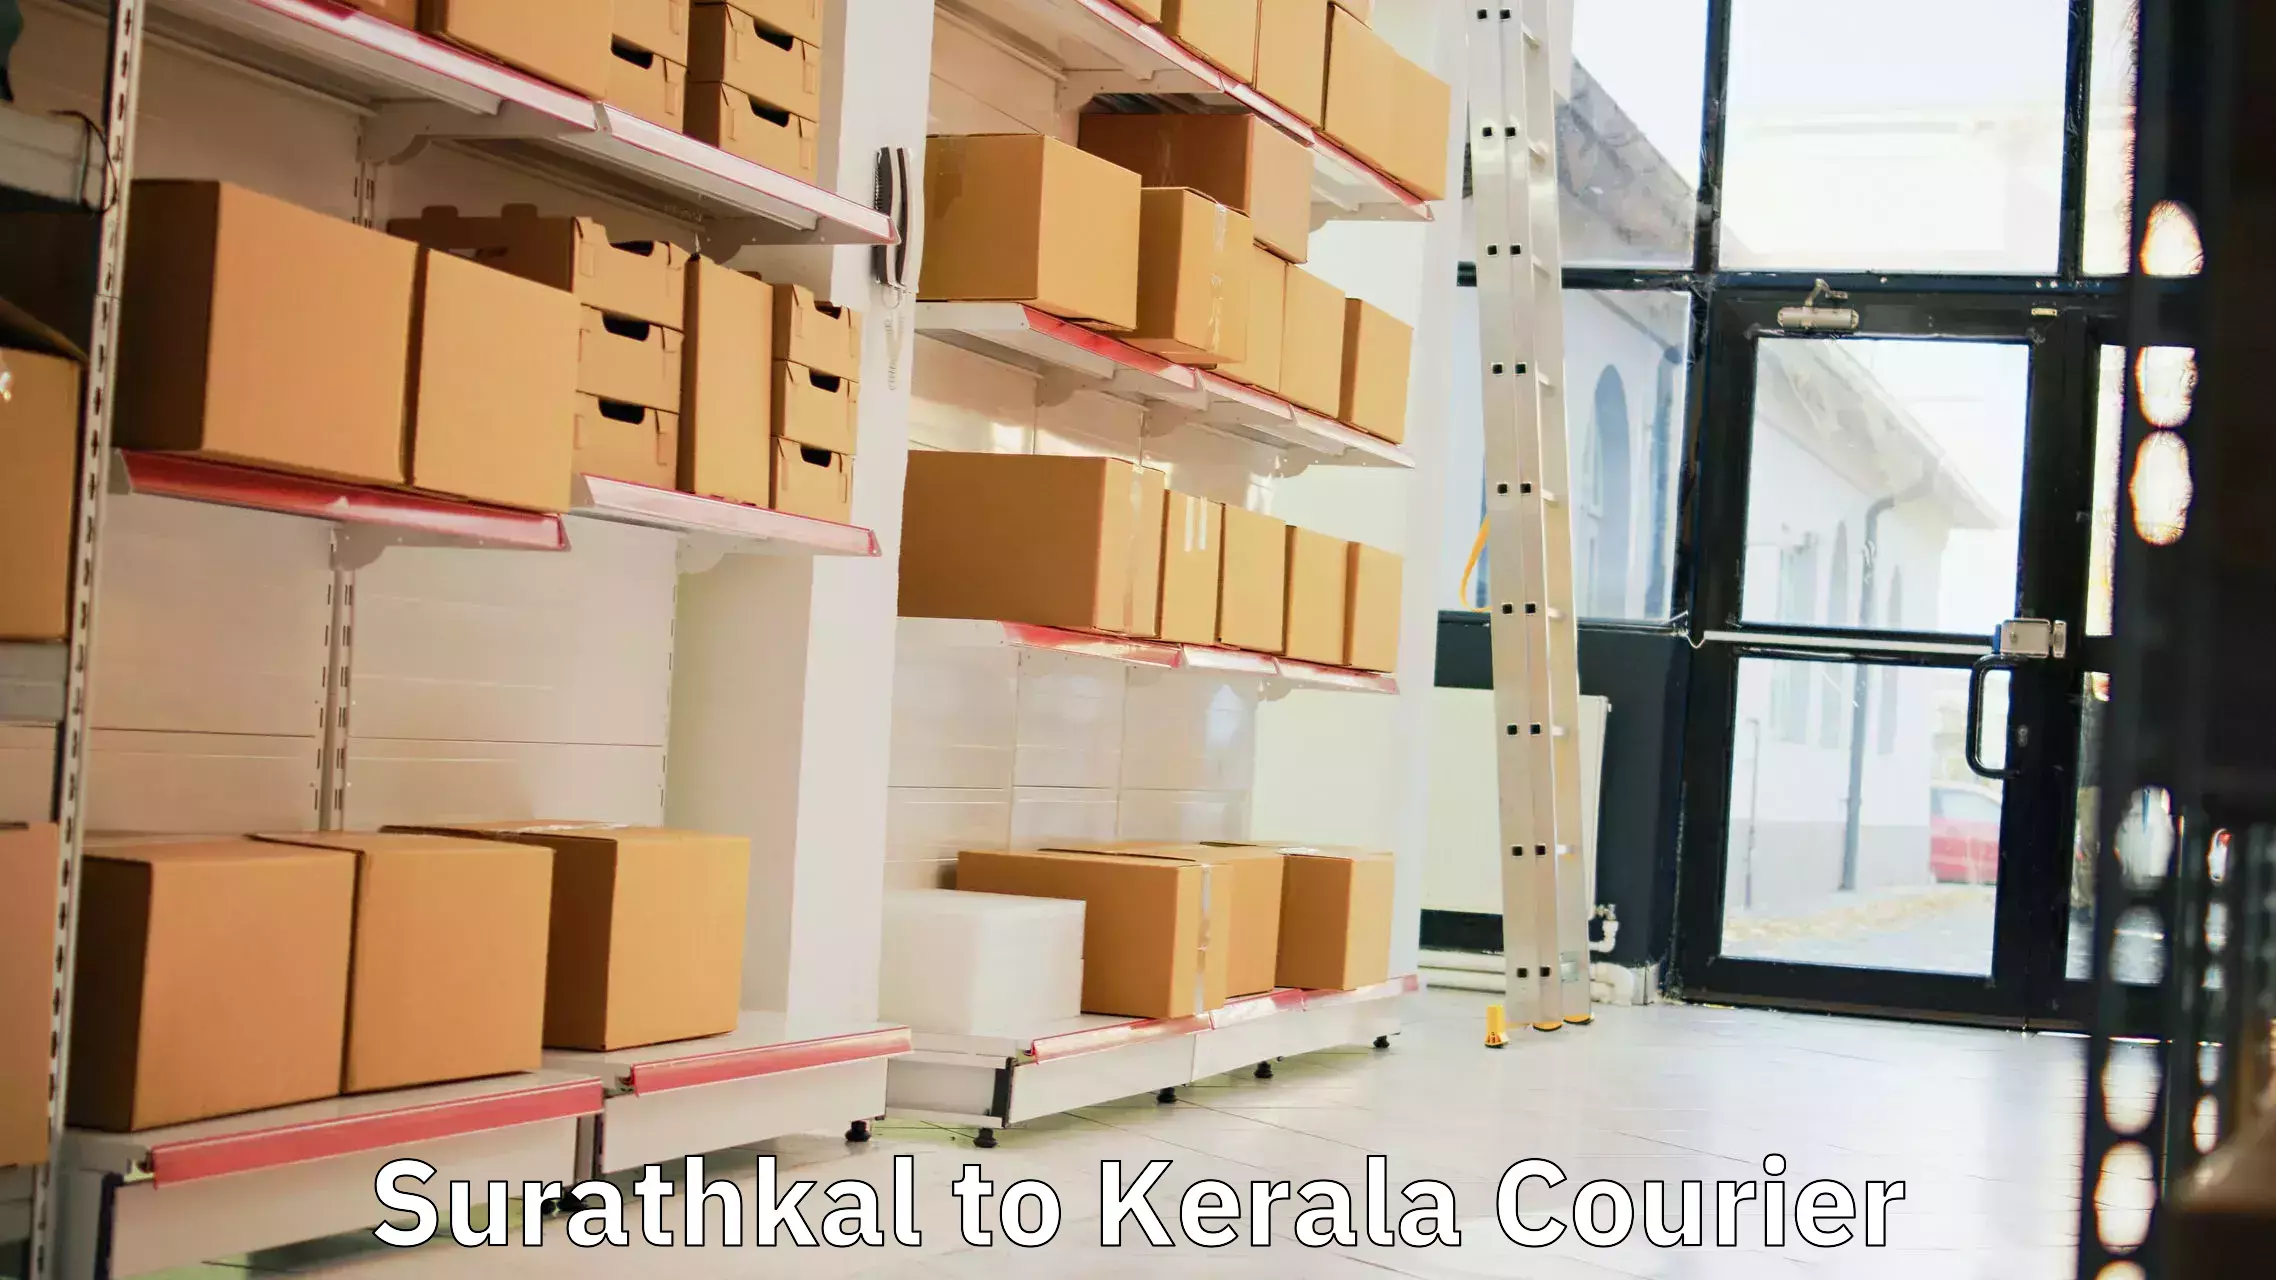 Courier service efficiency Surathkal to Cochin Port Kochi